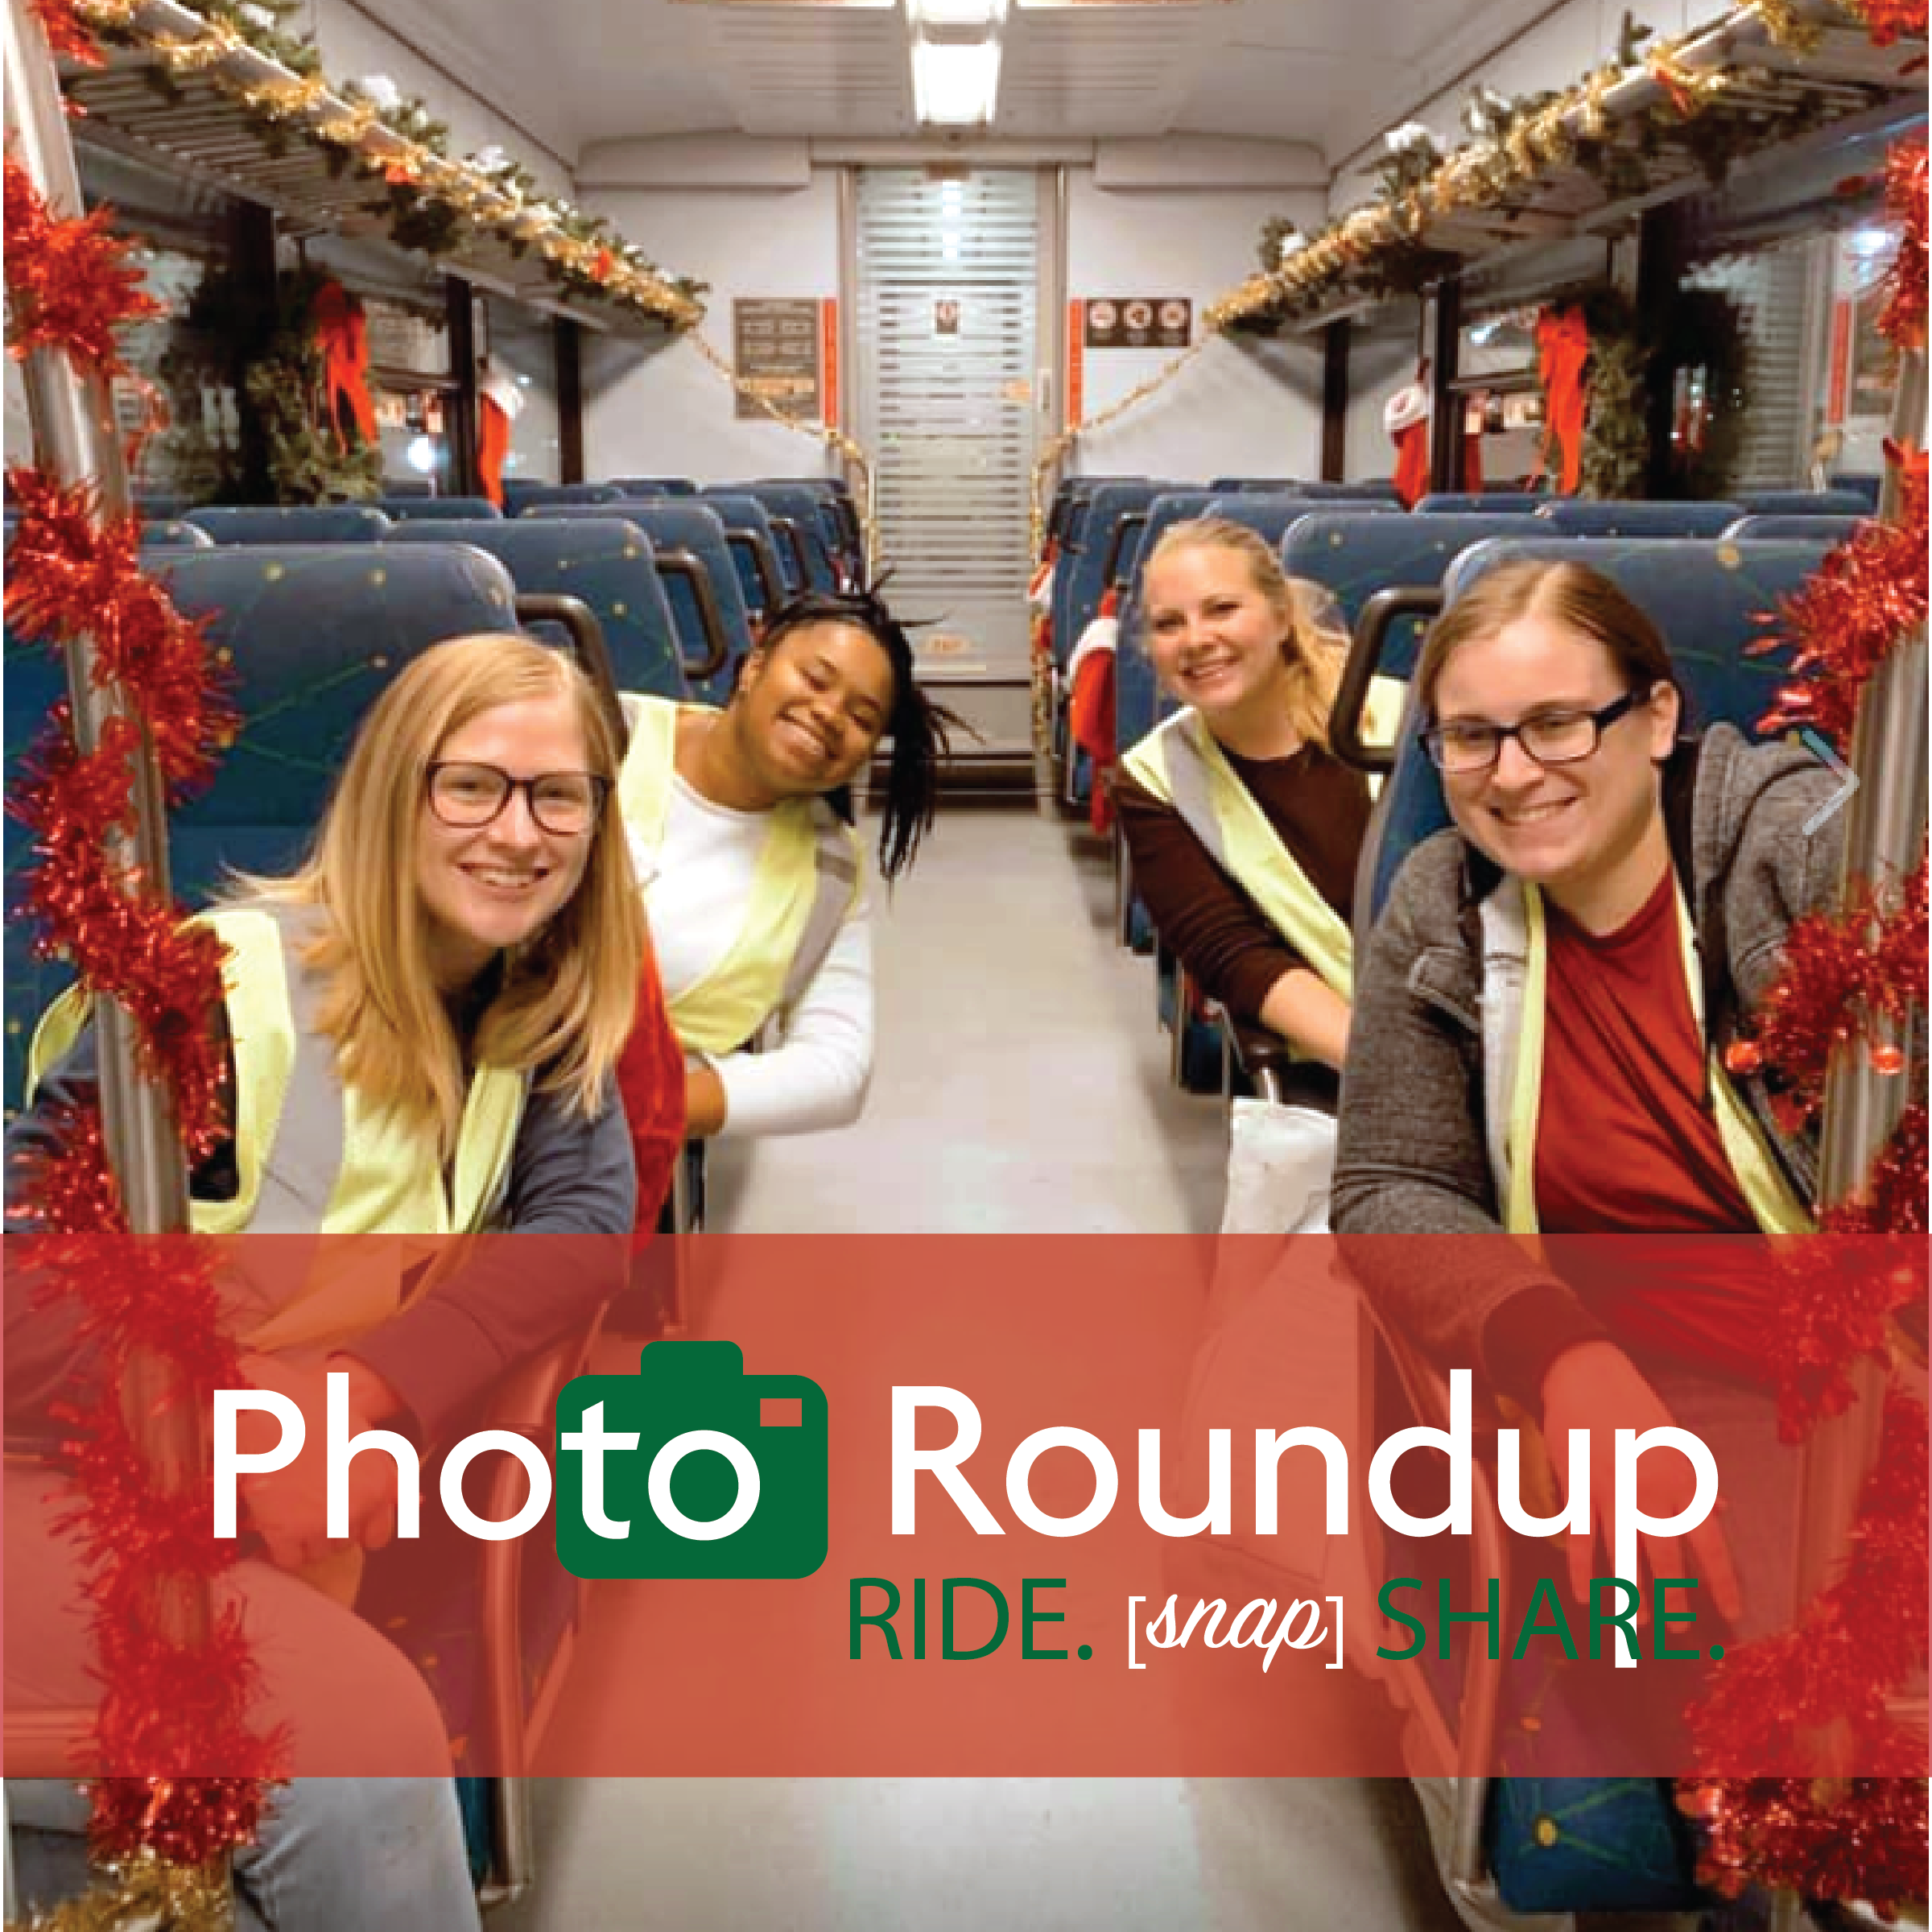 Capture This: December Photo Roundup